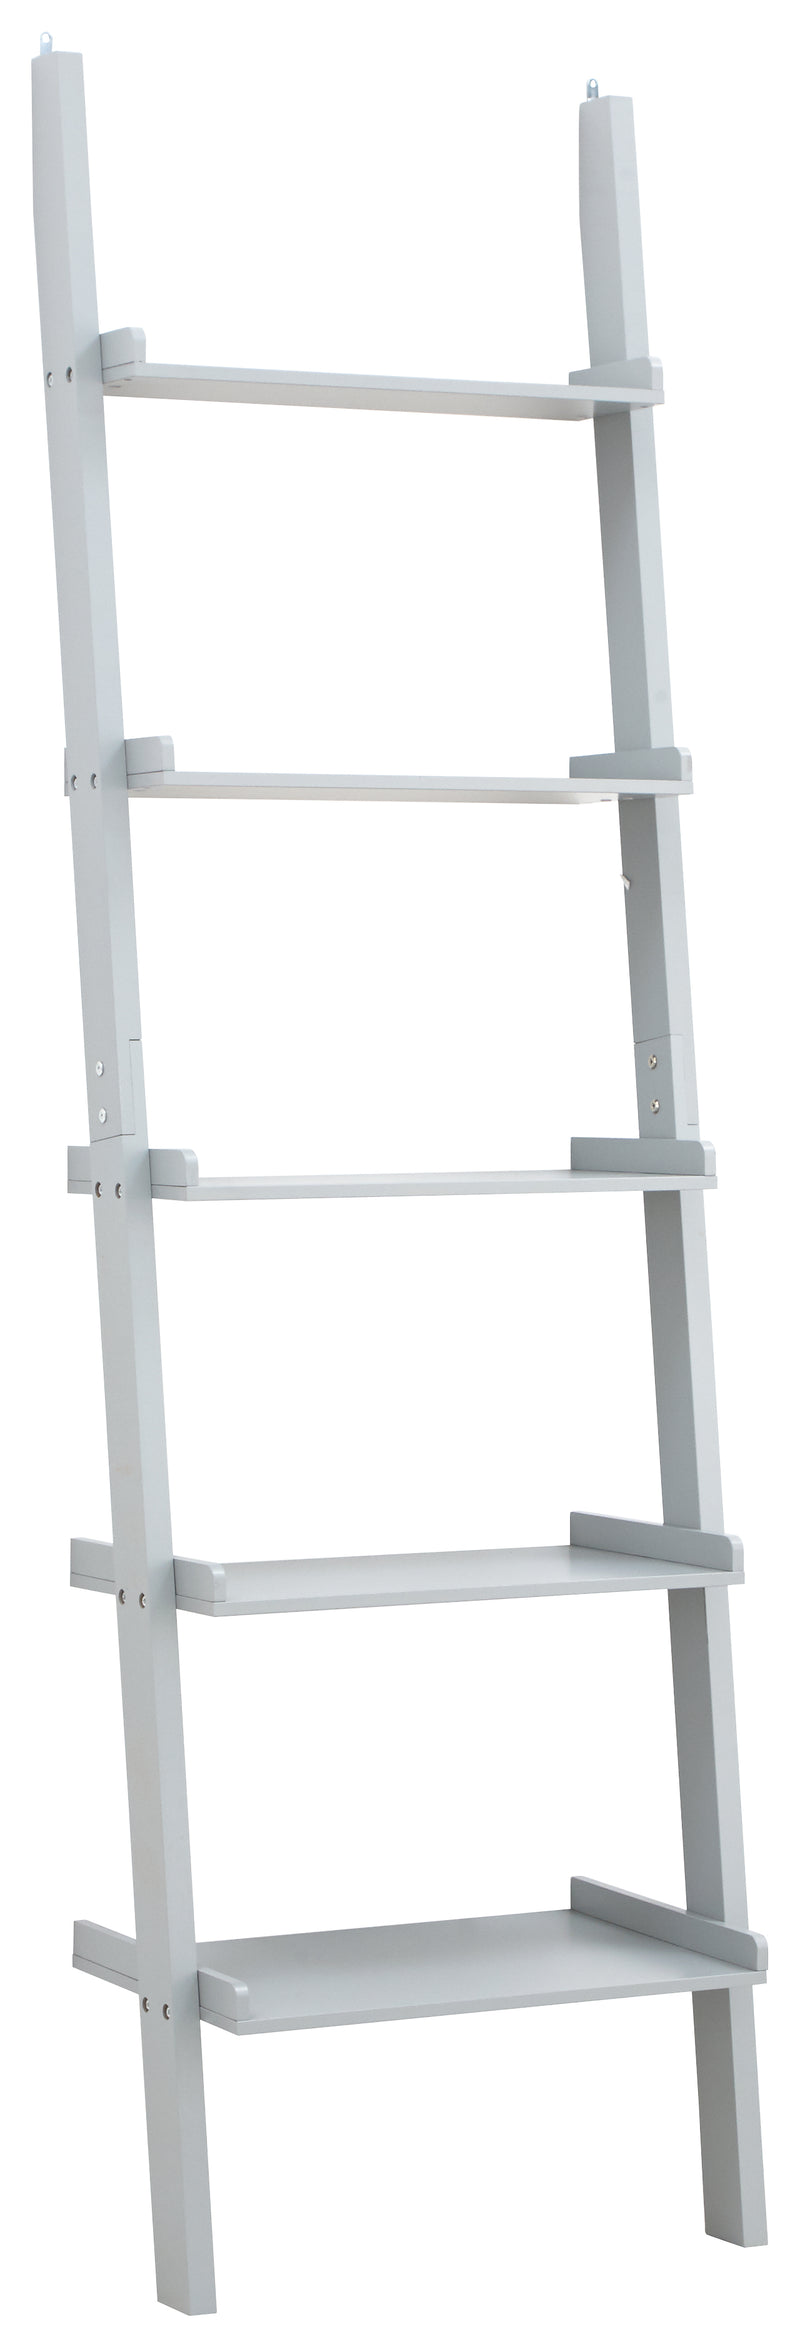 Ladder Style 5 Tier Wall Rack (Grey)